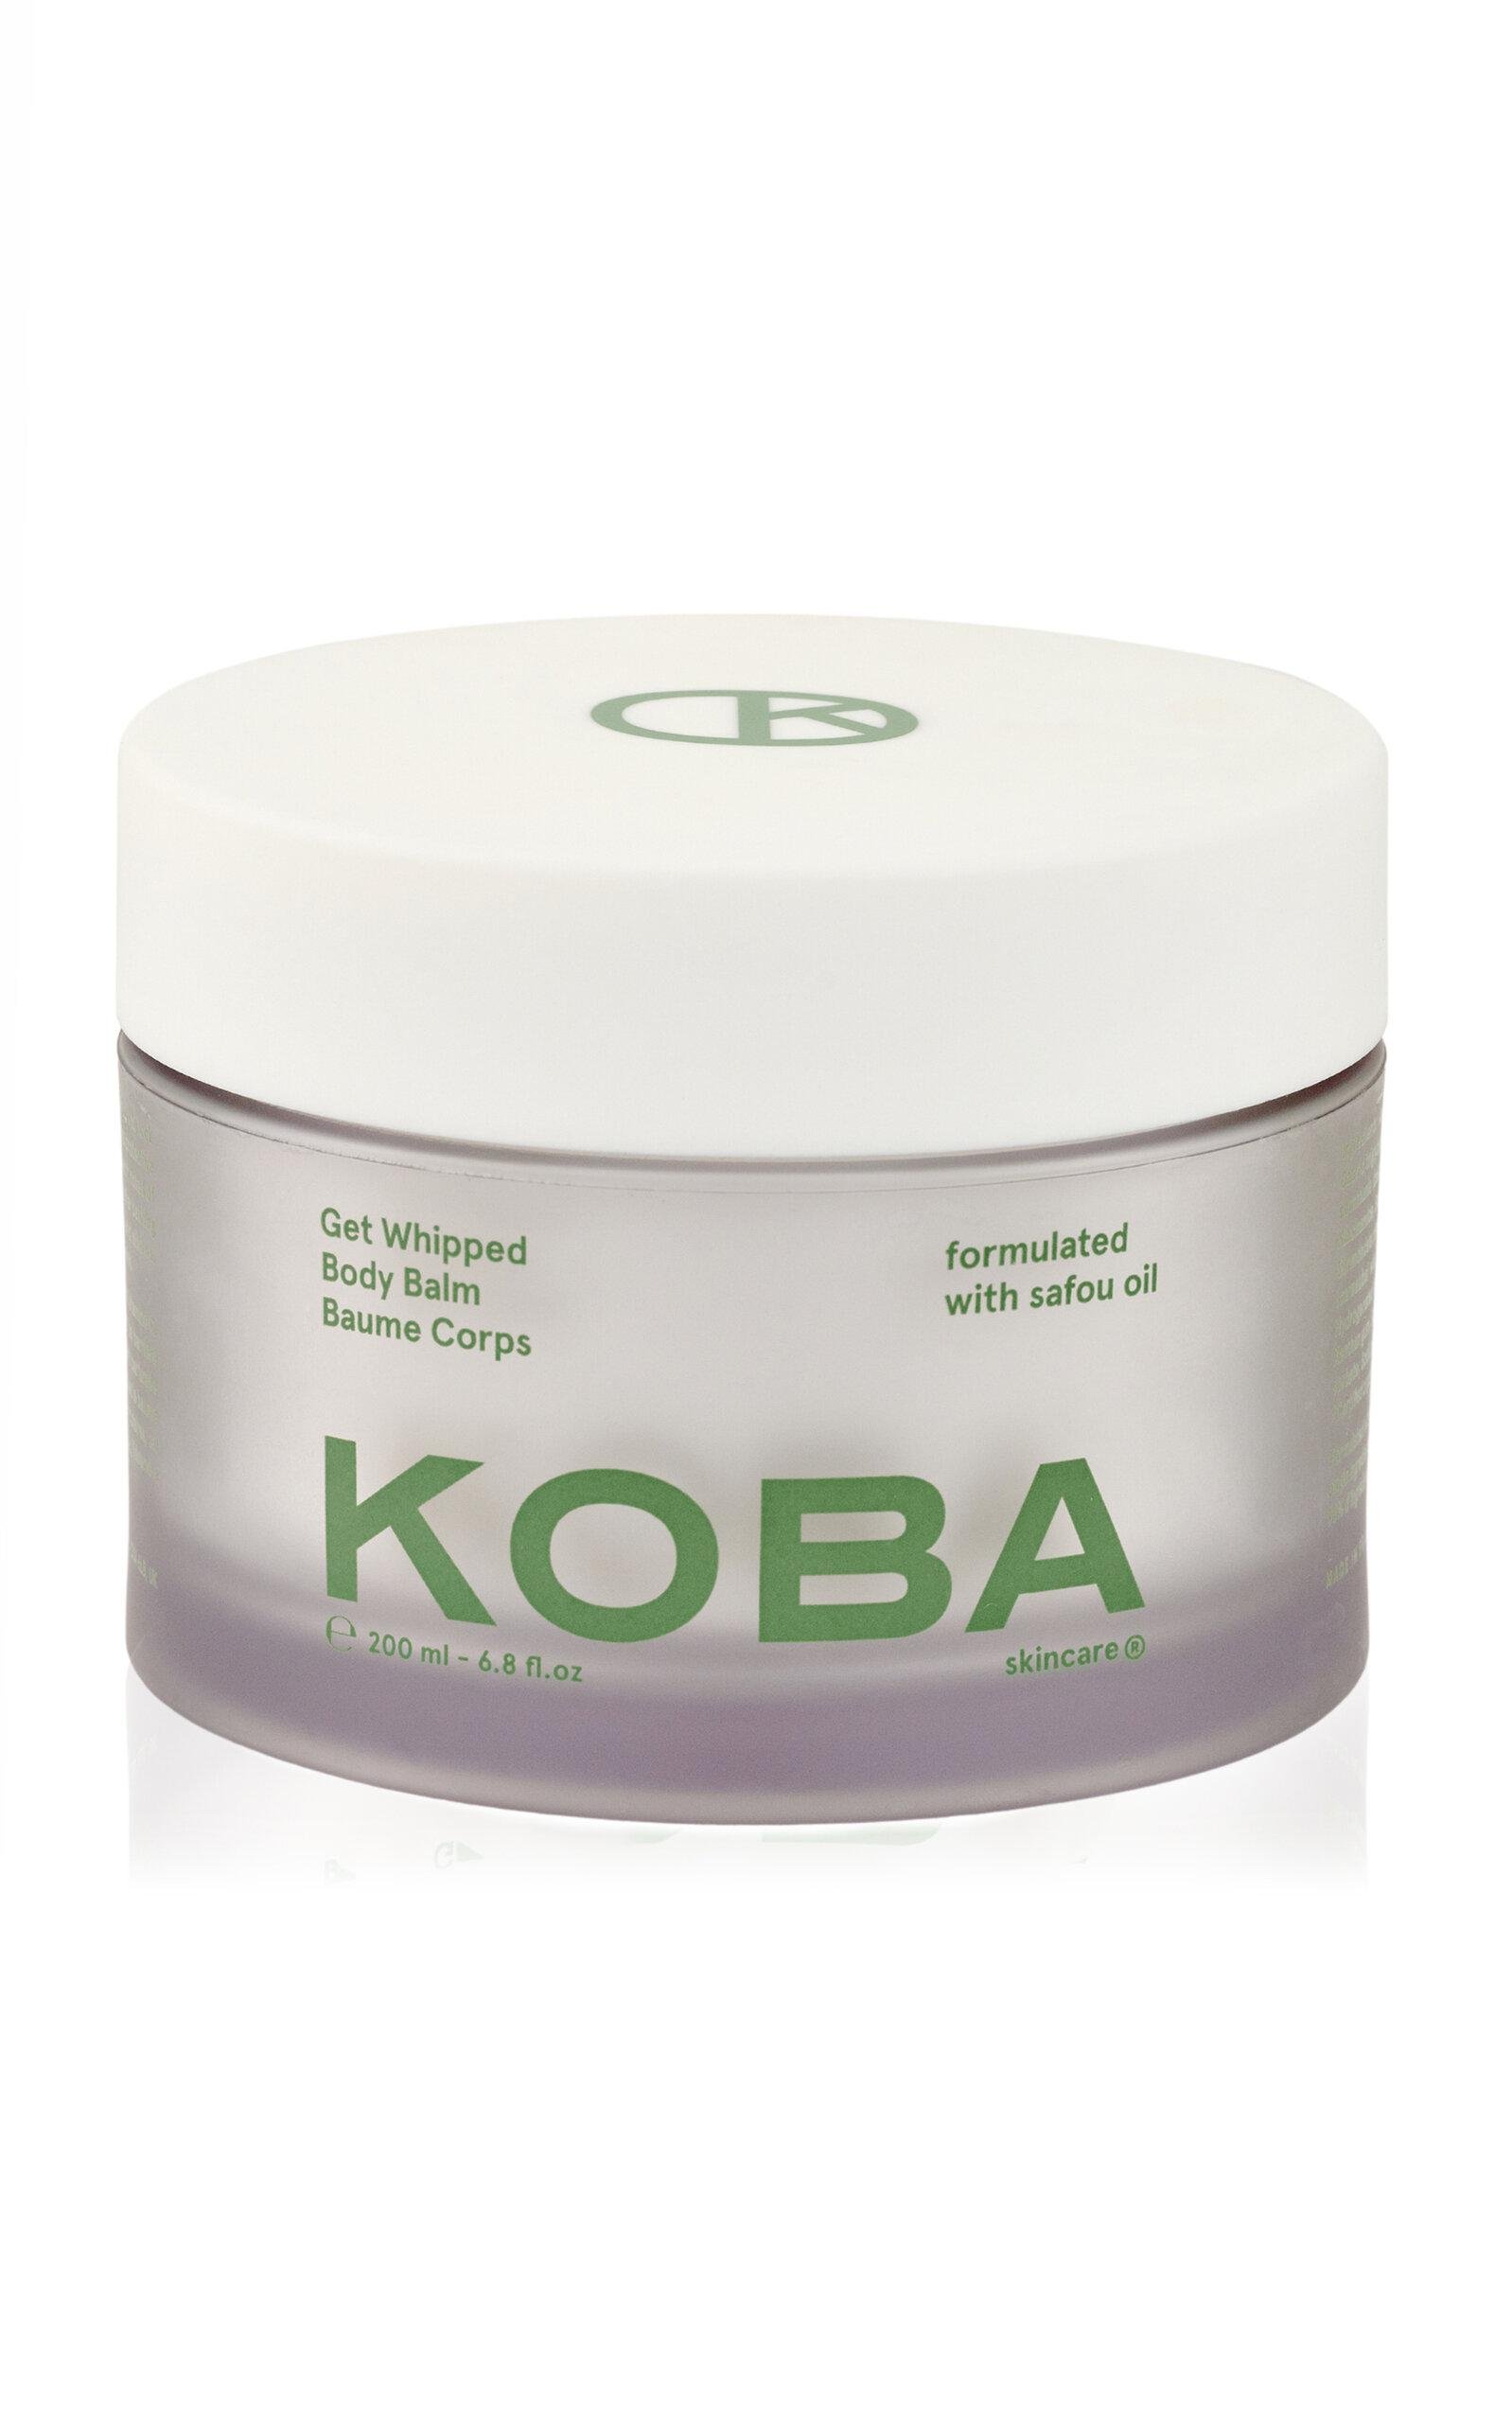 KOBA skincare  Get Whipped Body Balm - Moda Operandi by KOBA SKINCARE